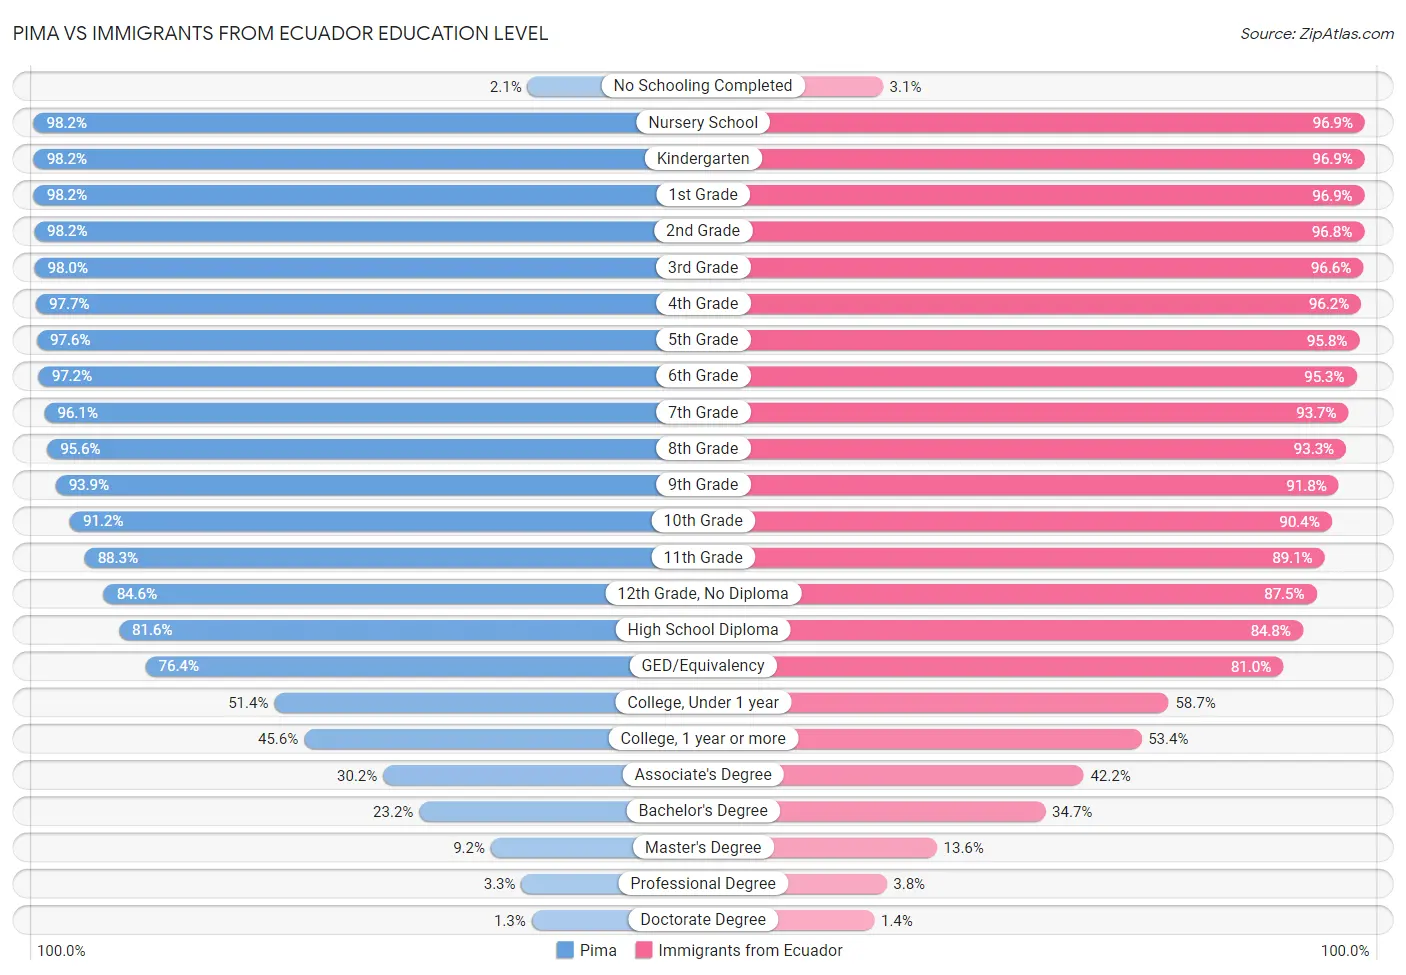 Pima vs Immigrants from Ecuador Education Level